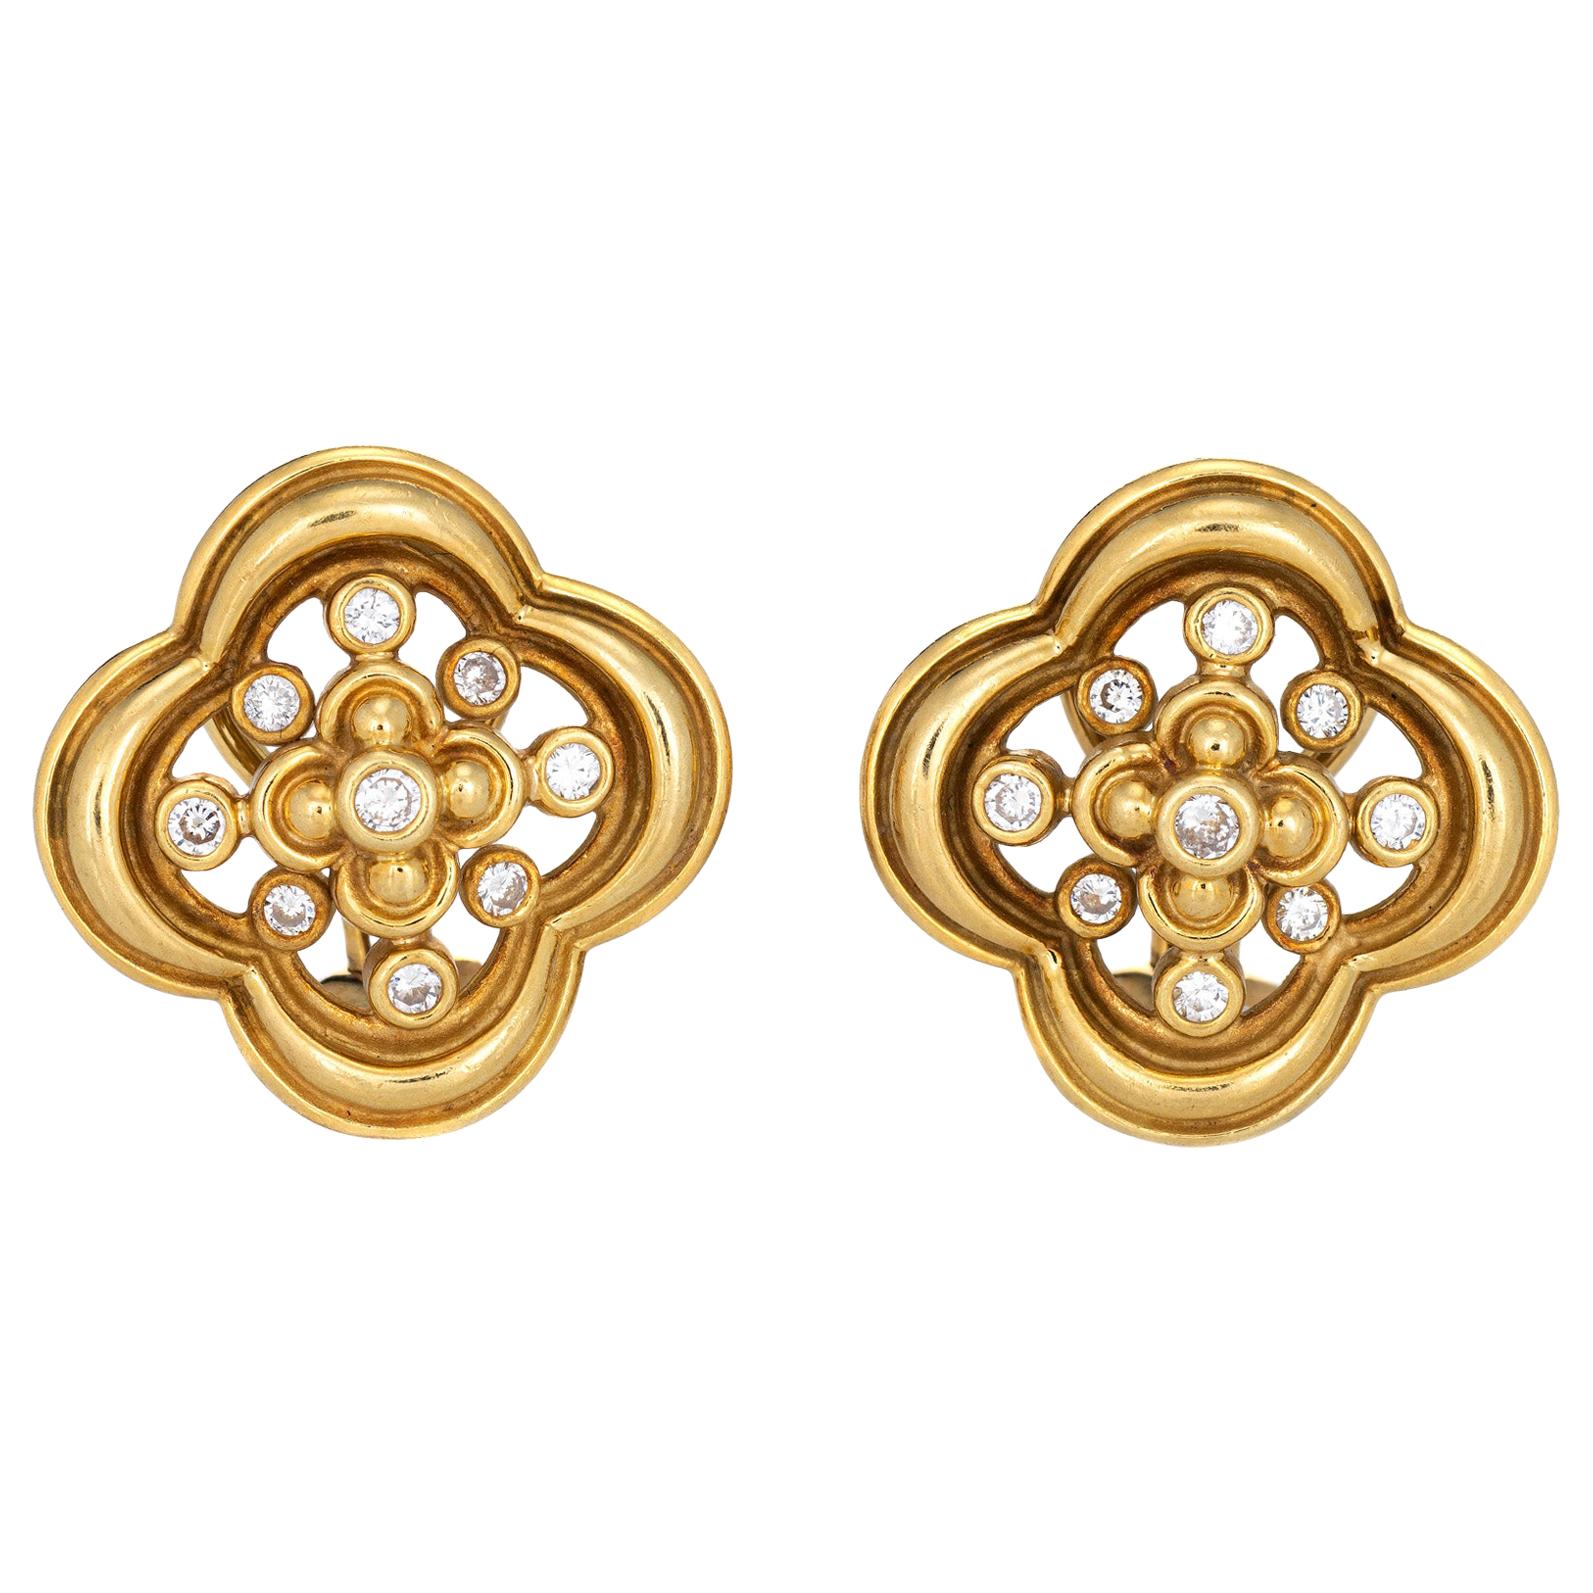 Jose Hess Diamond Earrings Vintage 18k Yellow Gold Quatrefoil Design Jewelry For Sale